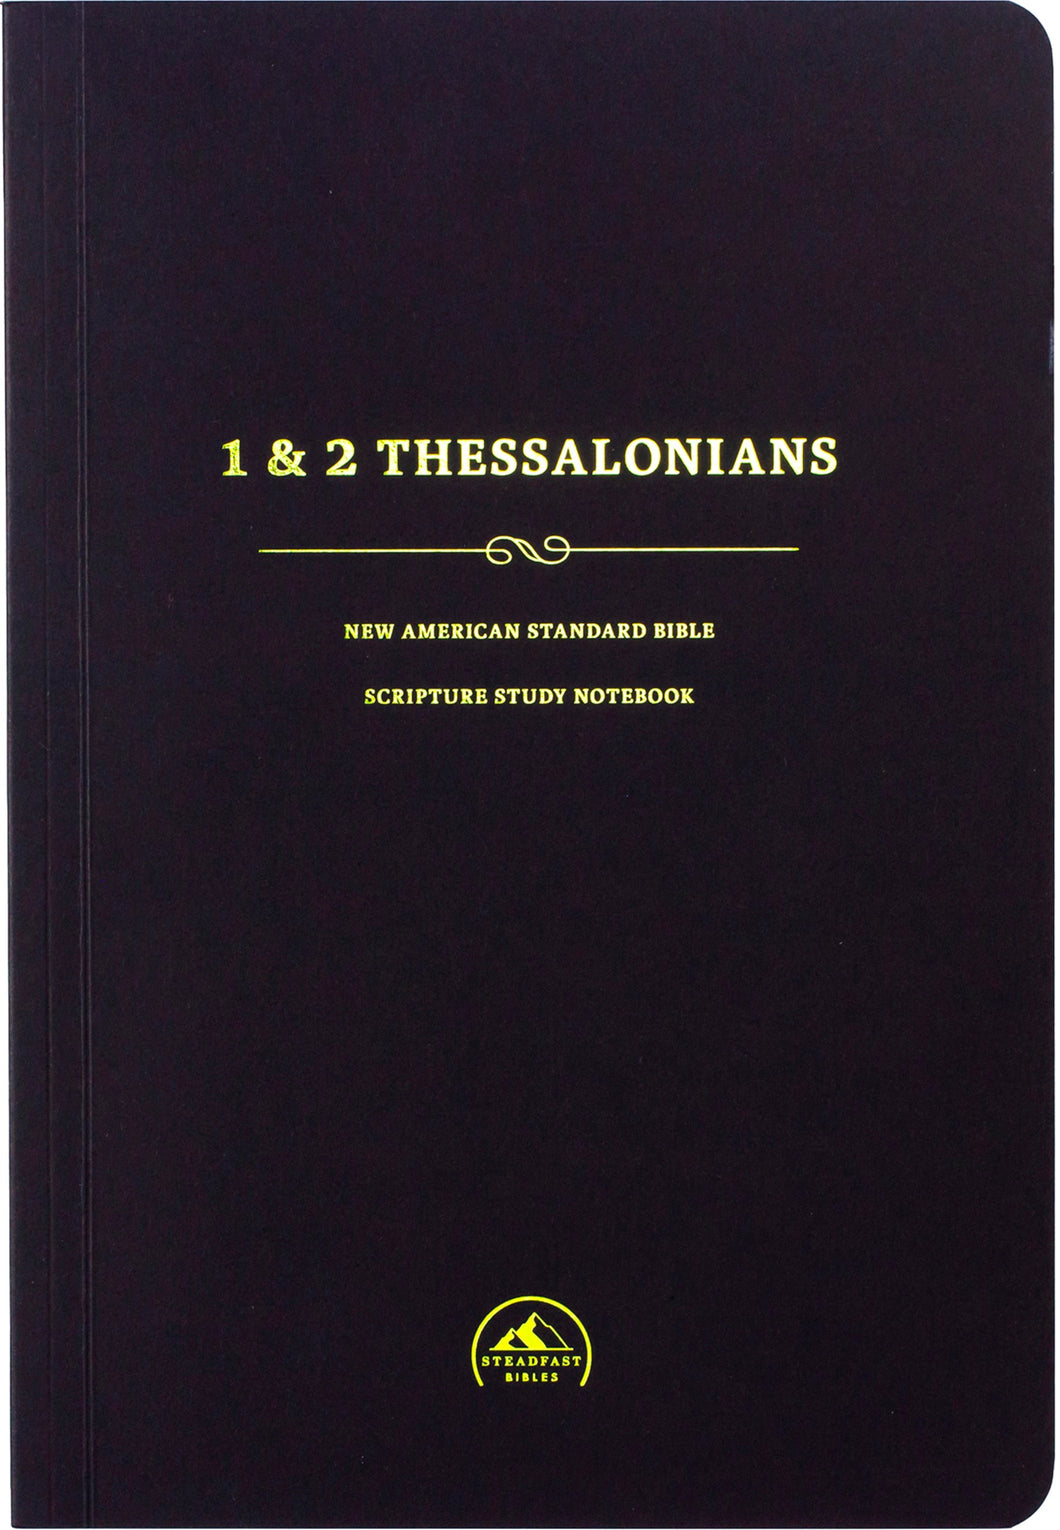 NASB 95 Scripture Study Notebook: 1 & 2 Thessalonians